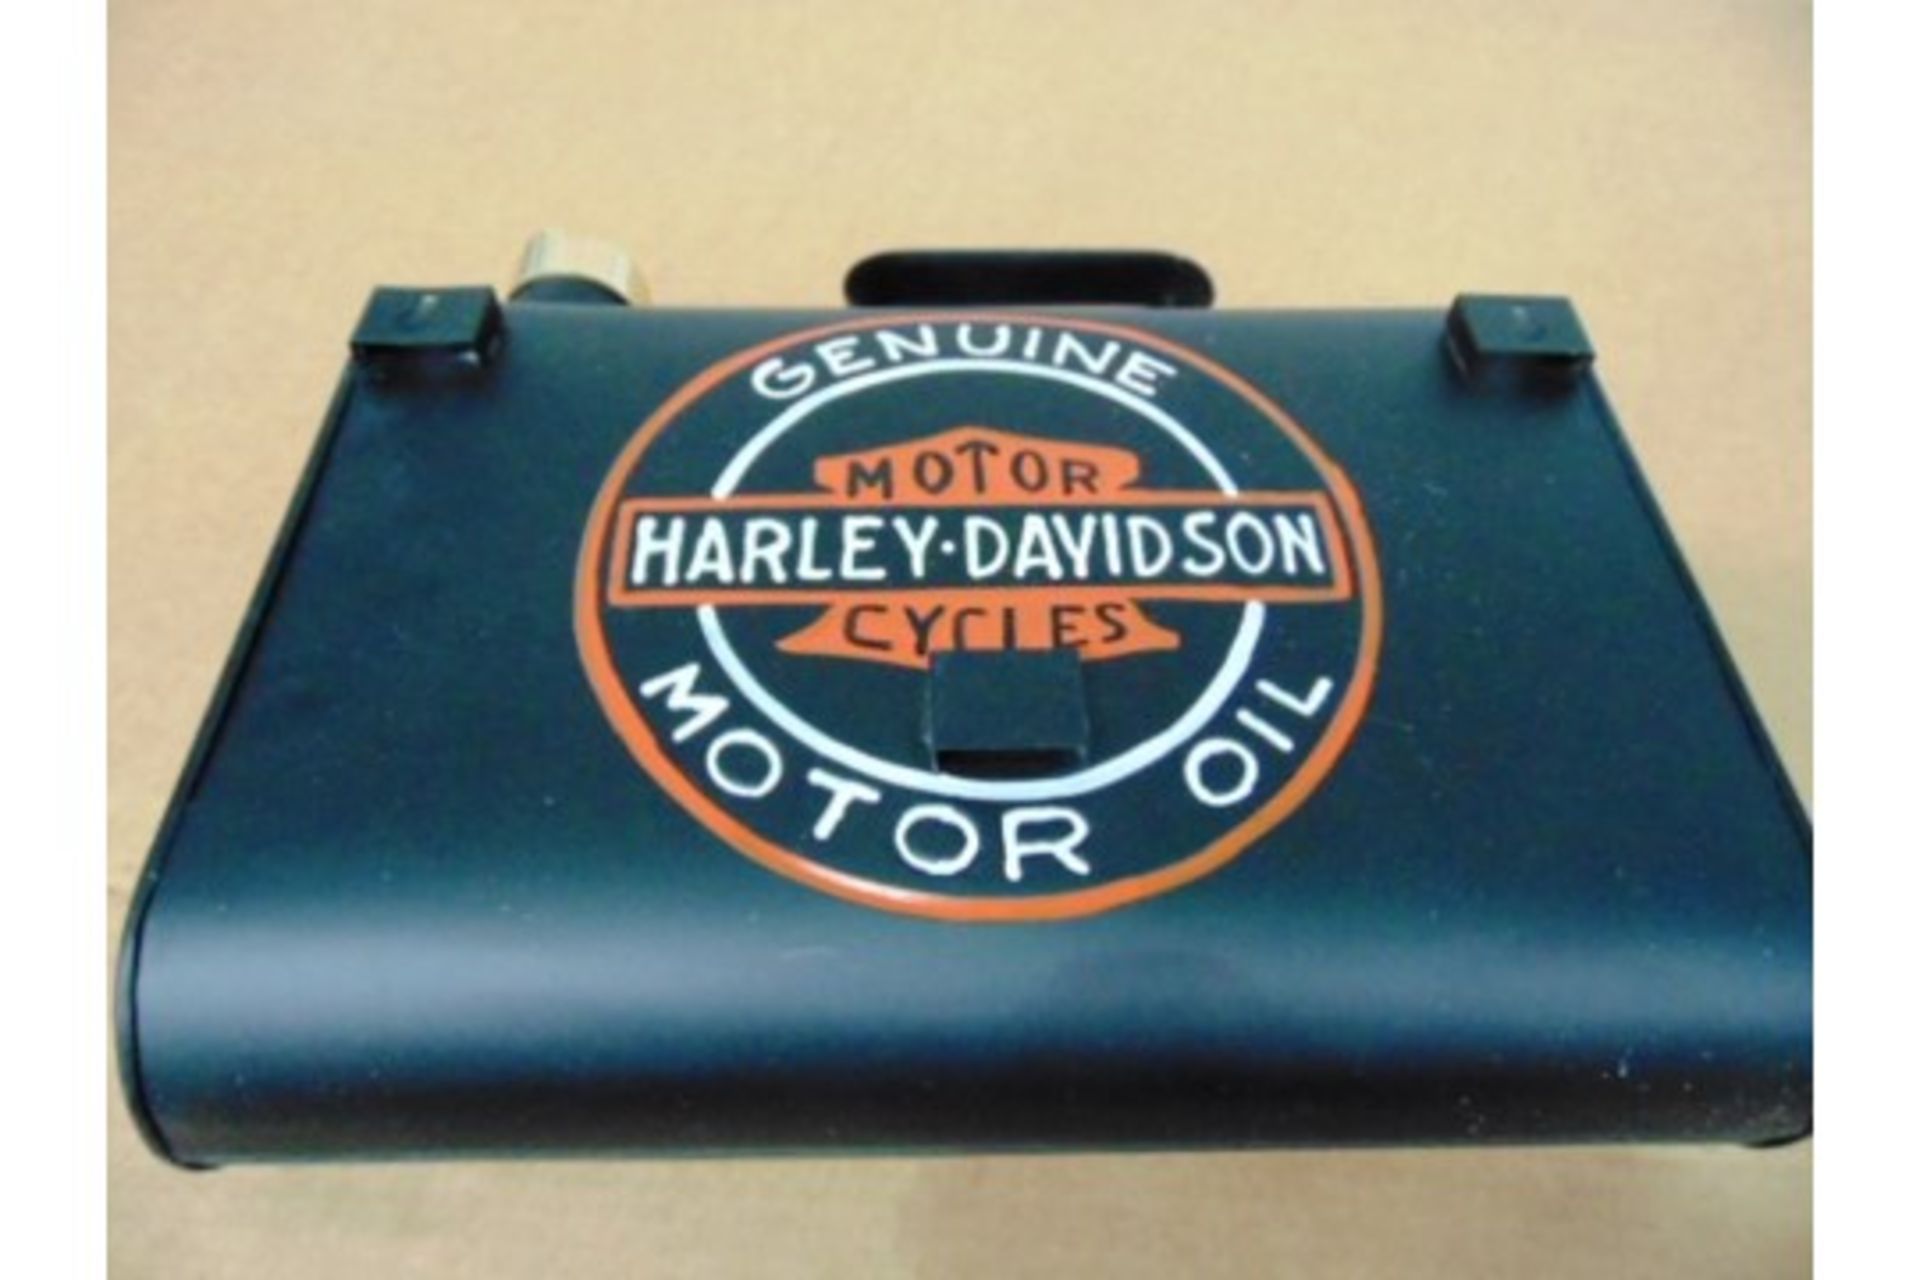 Reproduction Harley Davidson Branded Slimline Oil Can - Image 4 of 5